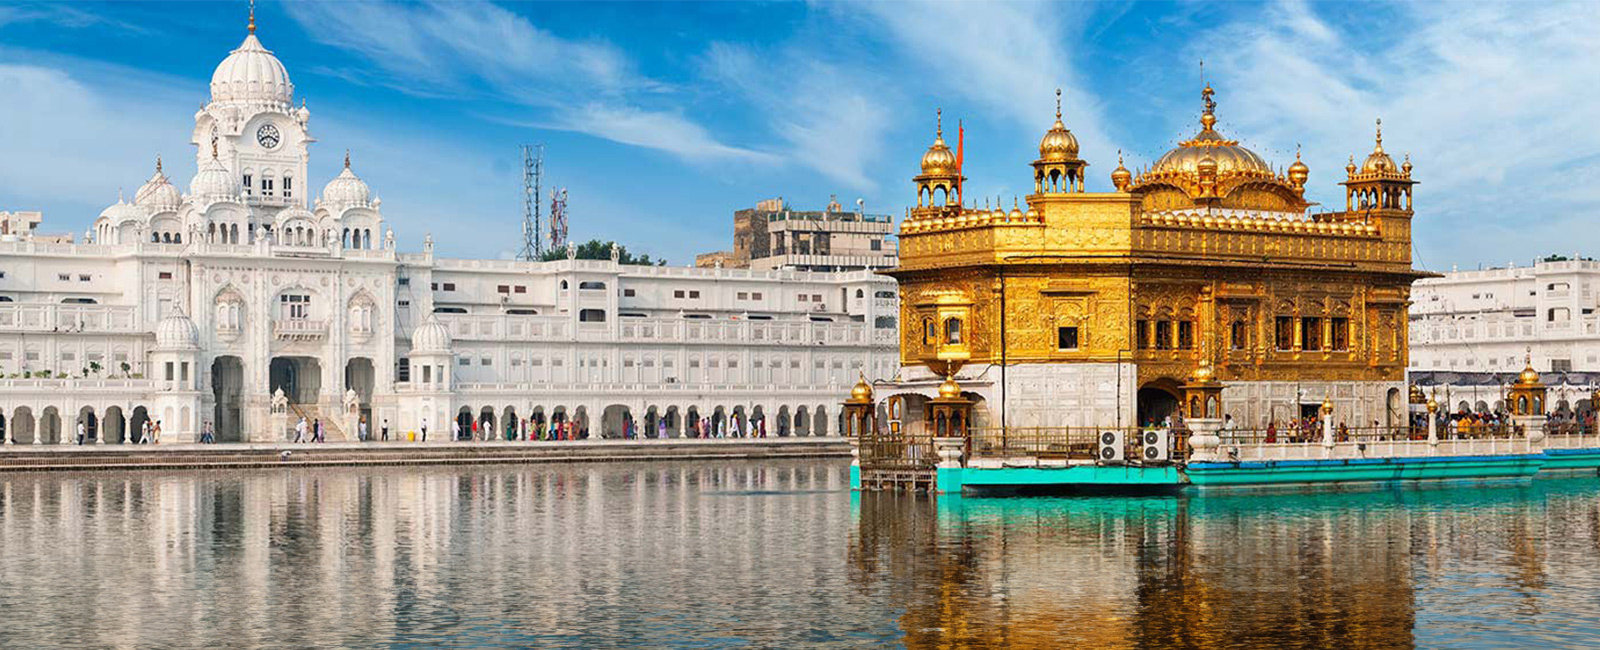 Golden Temple at Amritsar, Punjab